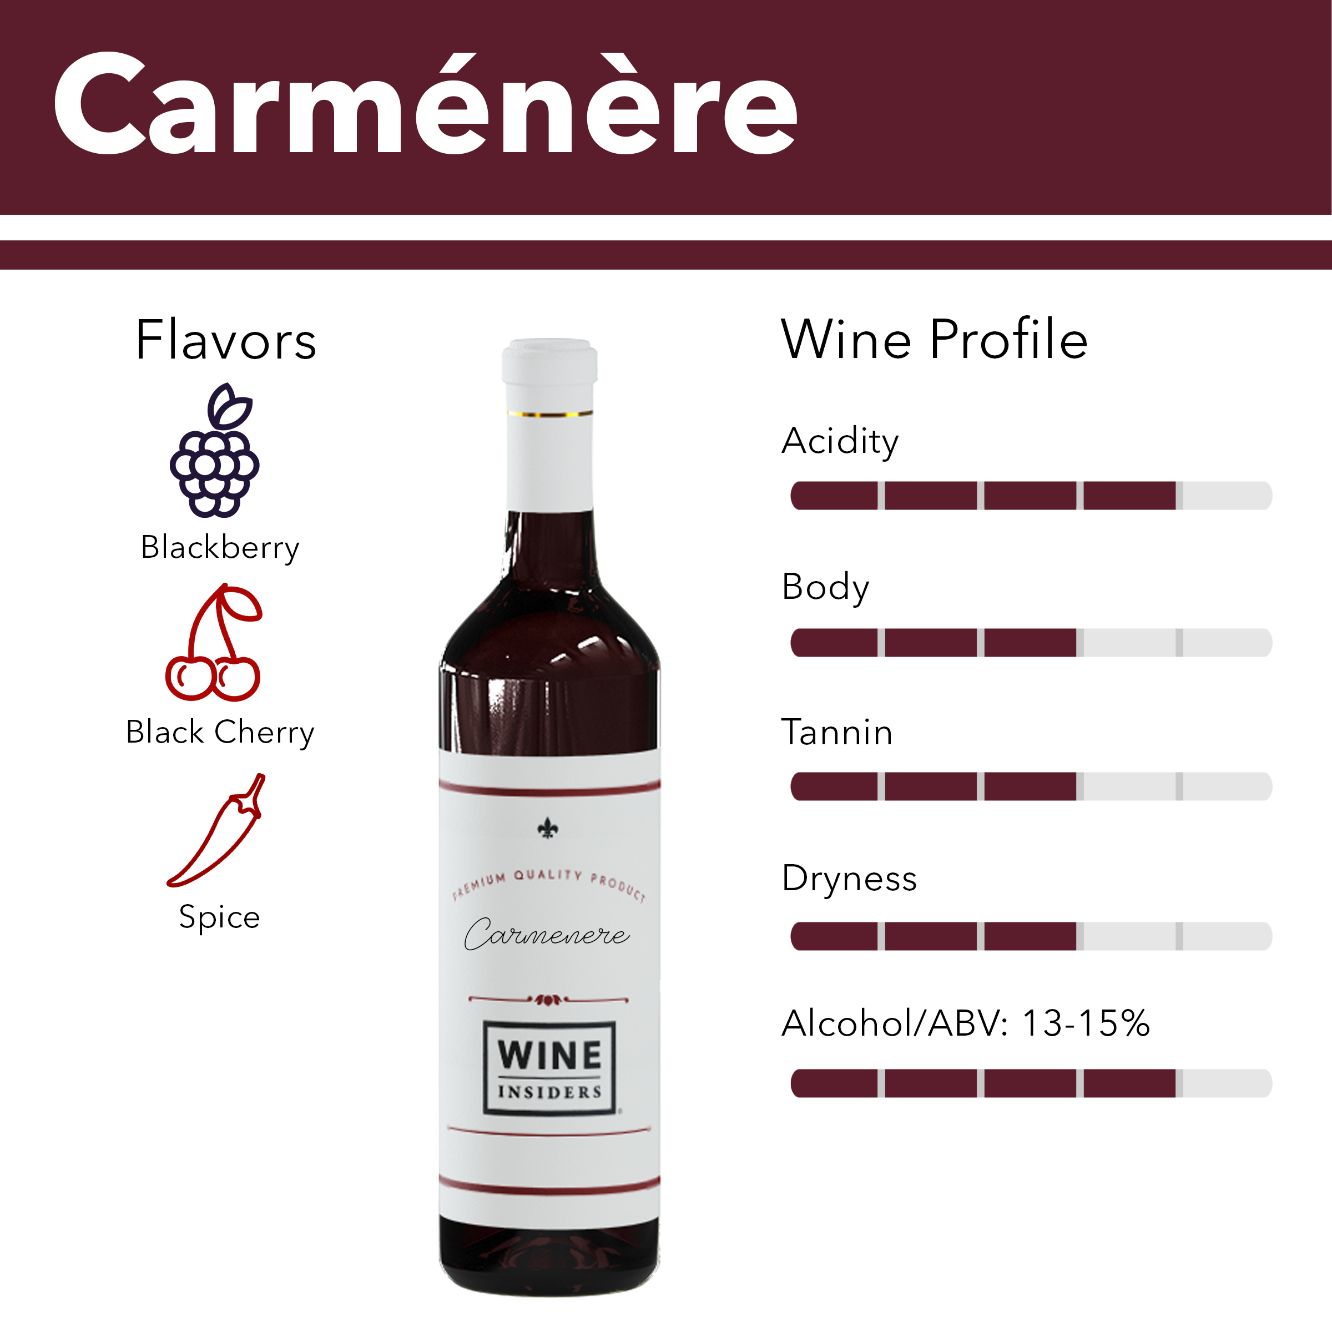 Carmenere wine flavor profile.